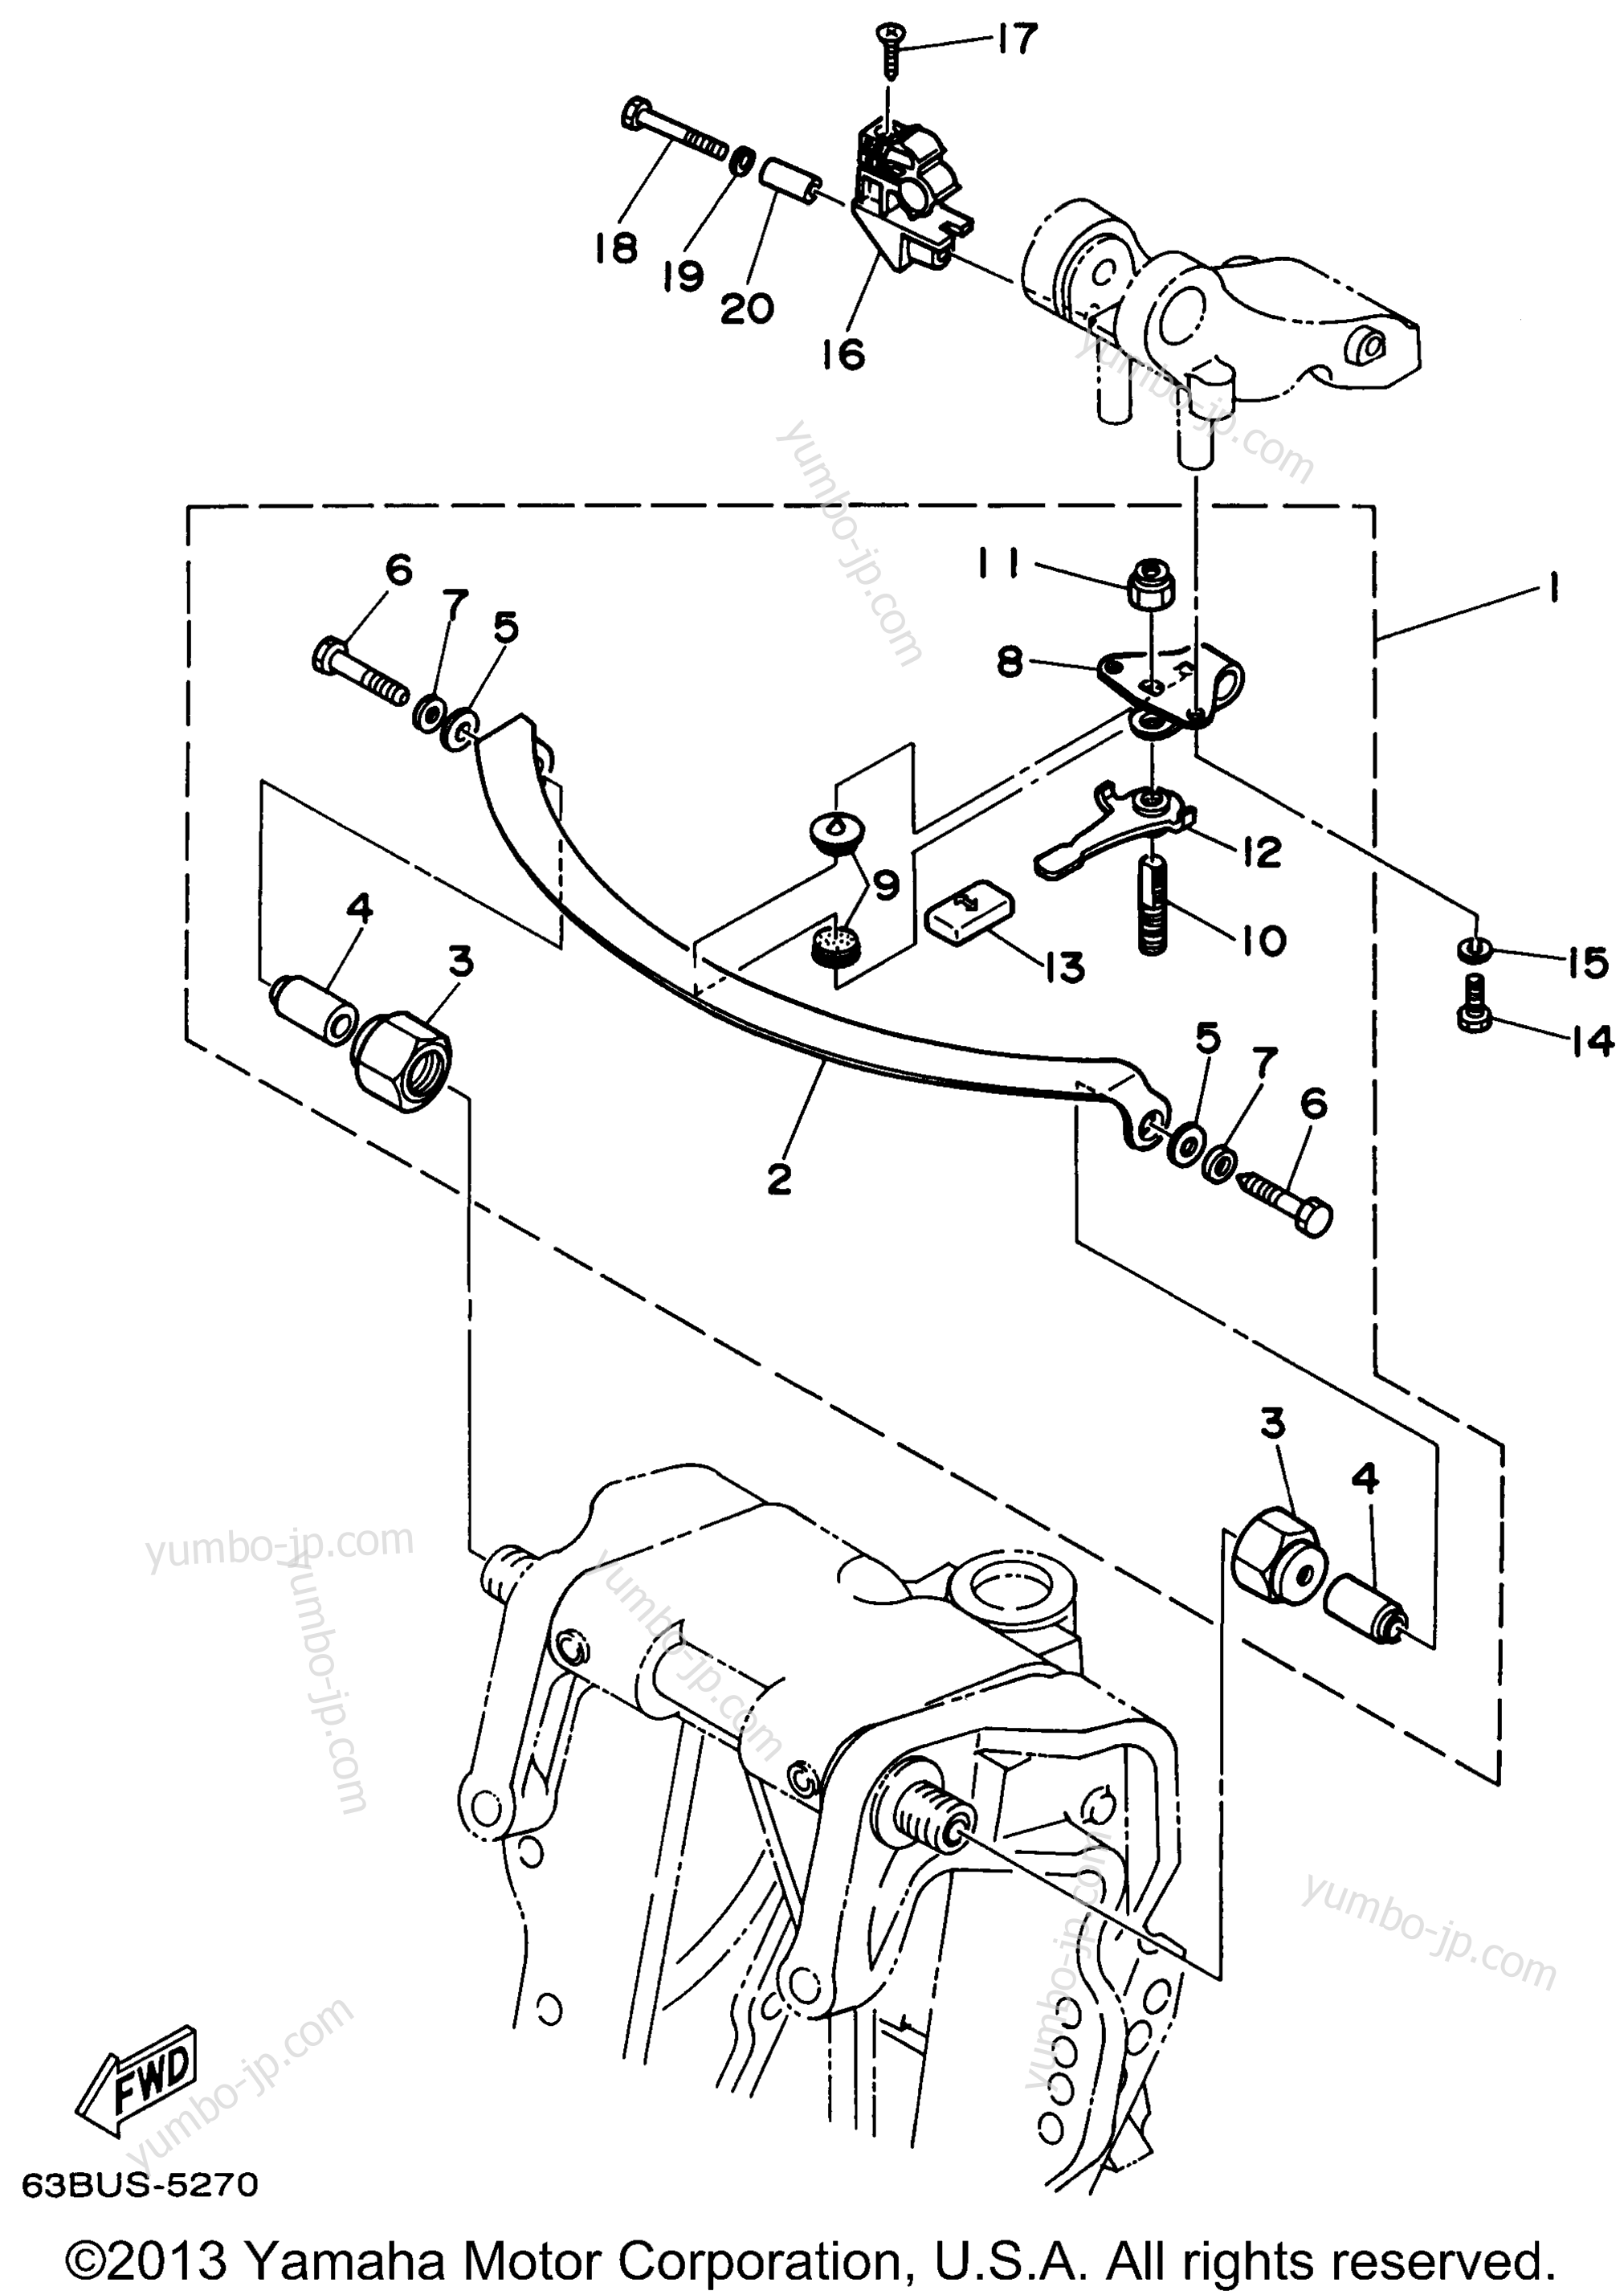 Alternate 2 Steering Friction для лодочных моторов YAMAHA P40EJRW_THLW (P40TLHW) 1998 г.